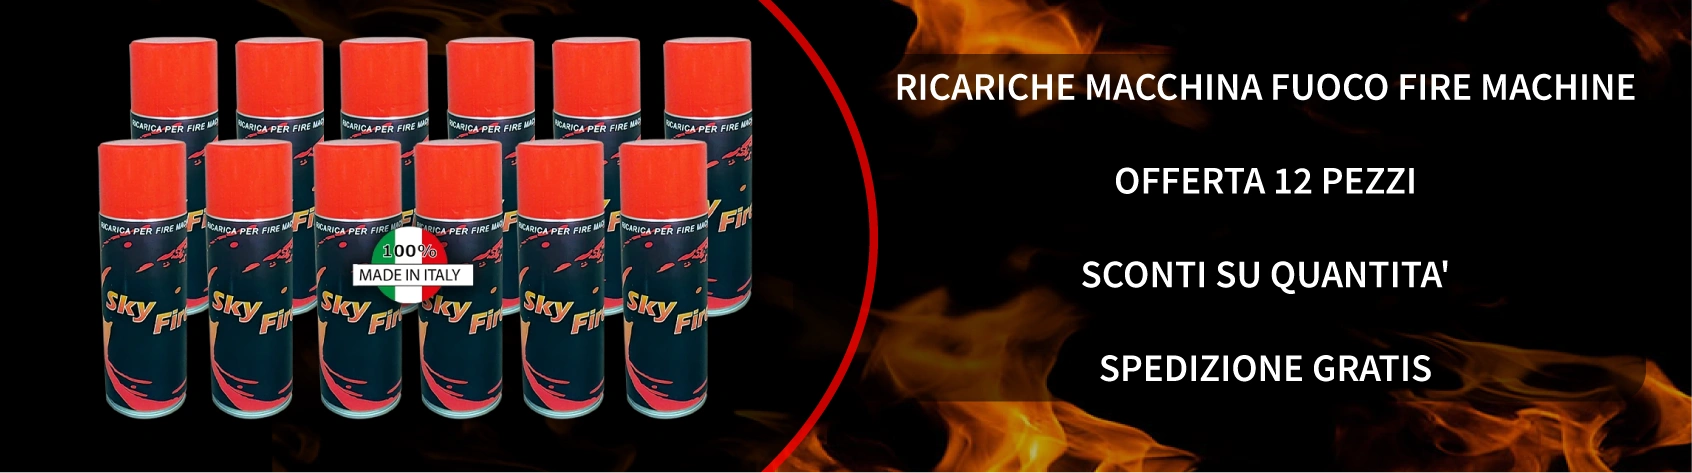 Ricariche fire machine offerta banner3